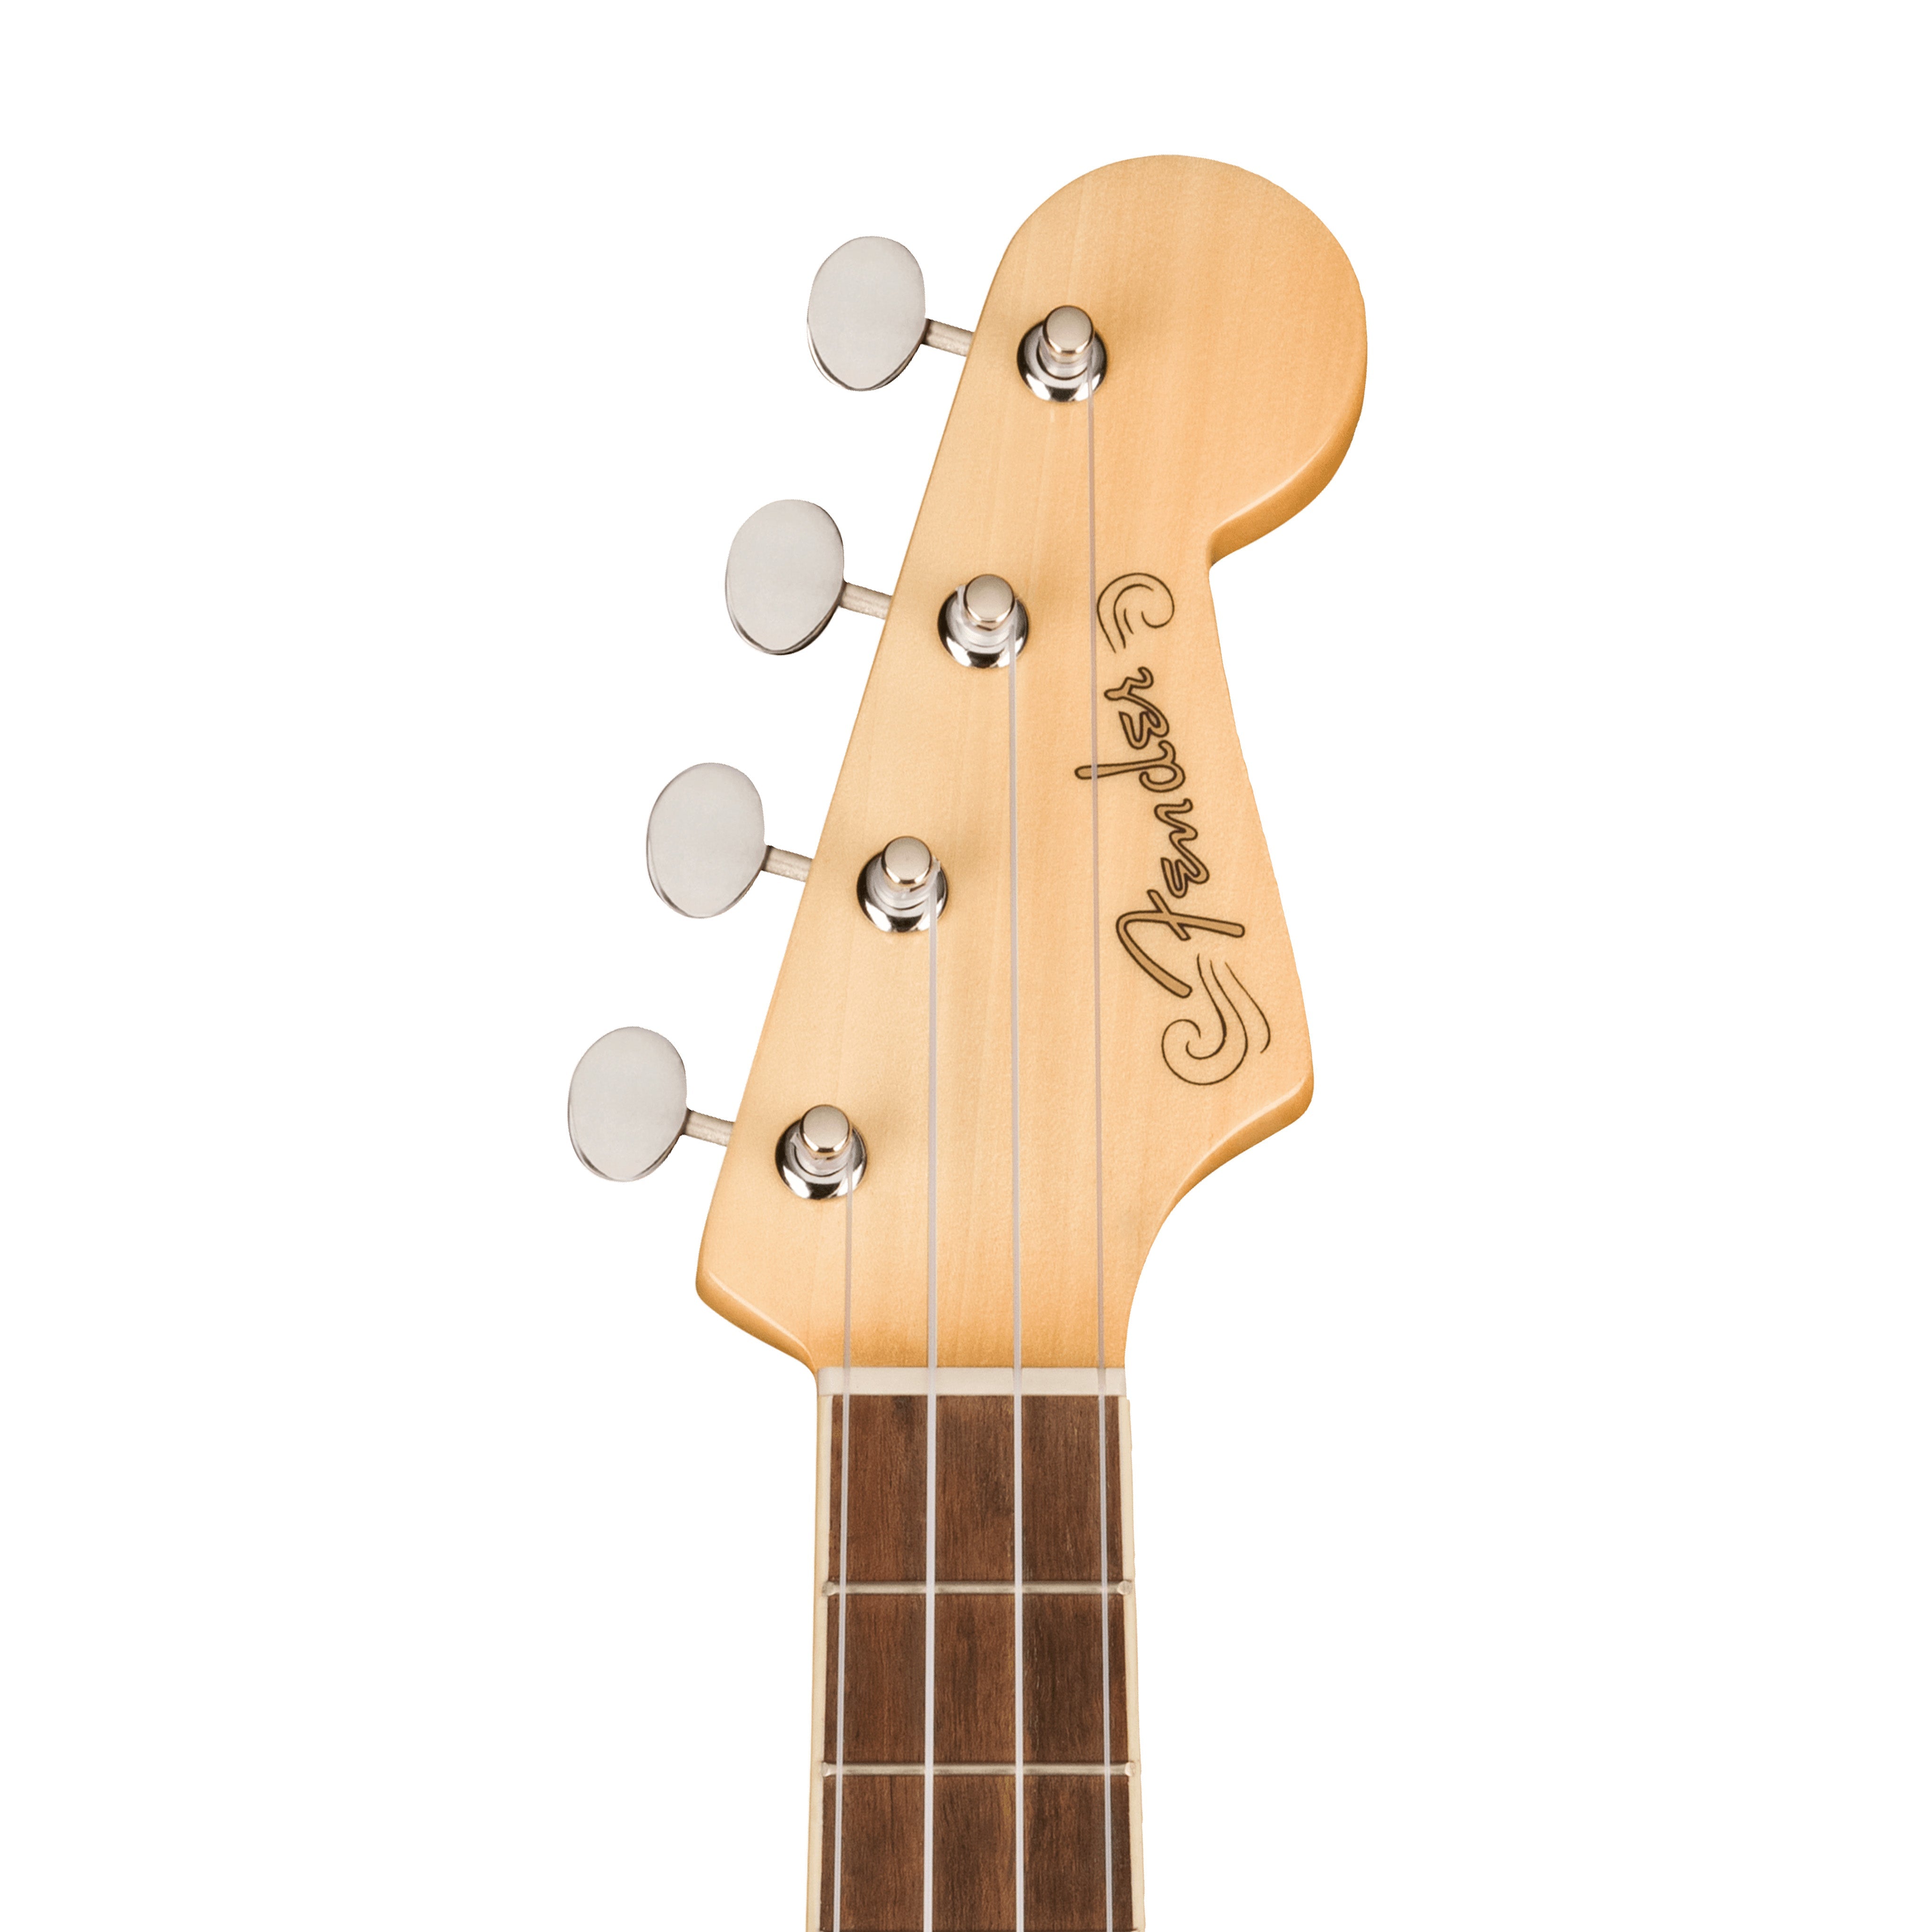 Fender Fullerton Stratocaster Ukulele, Candy Apple Red